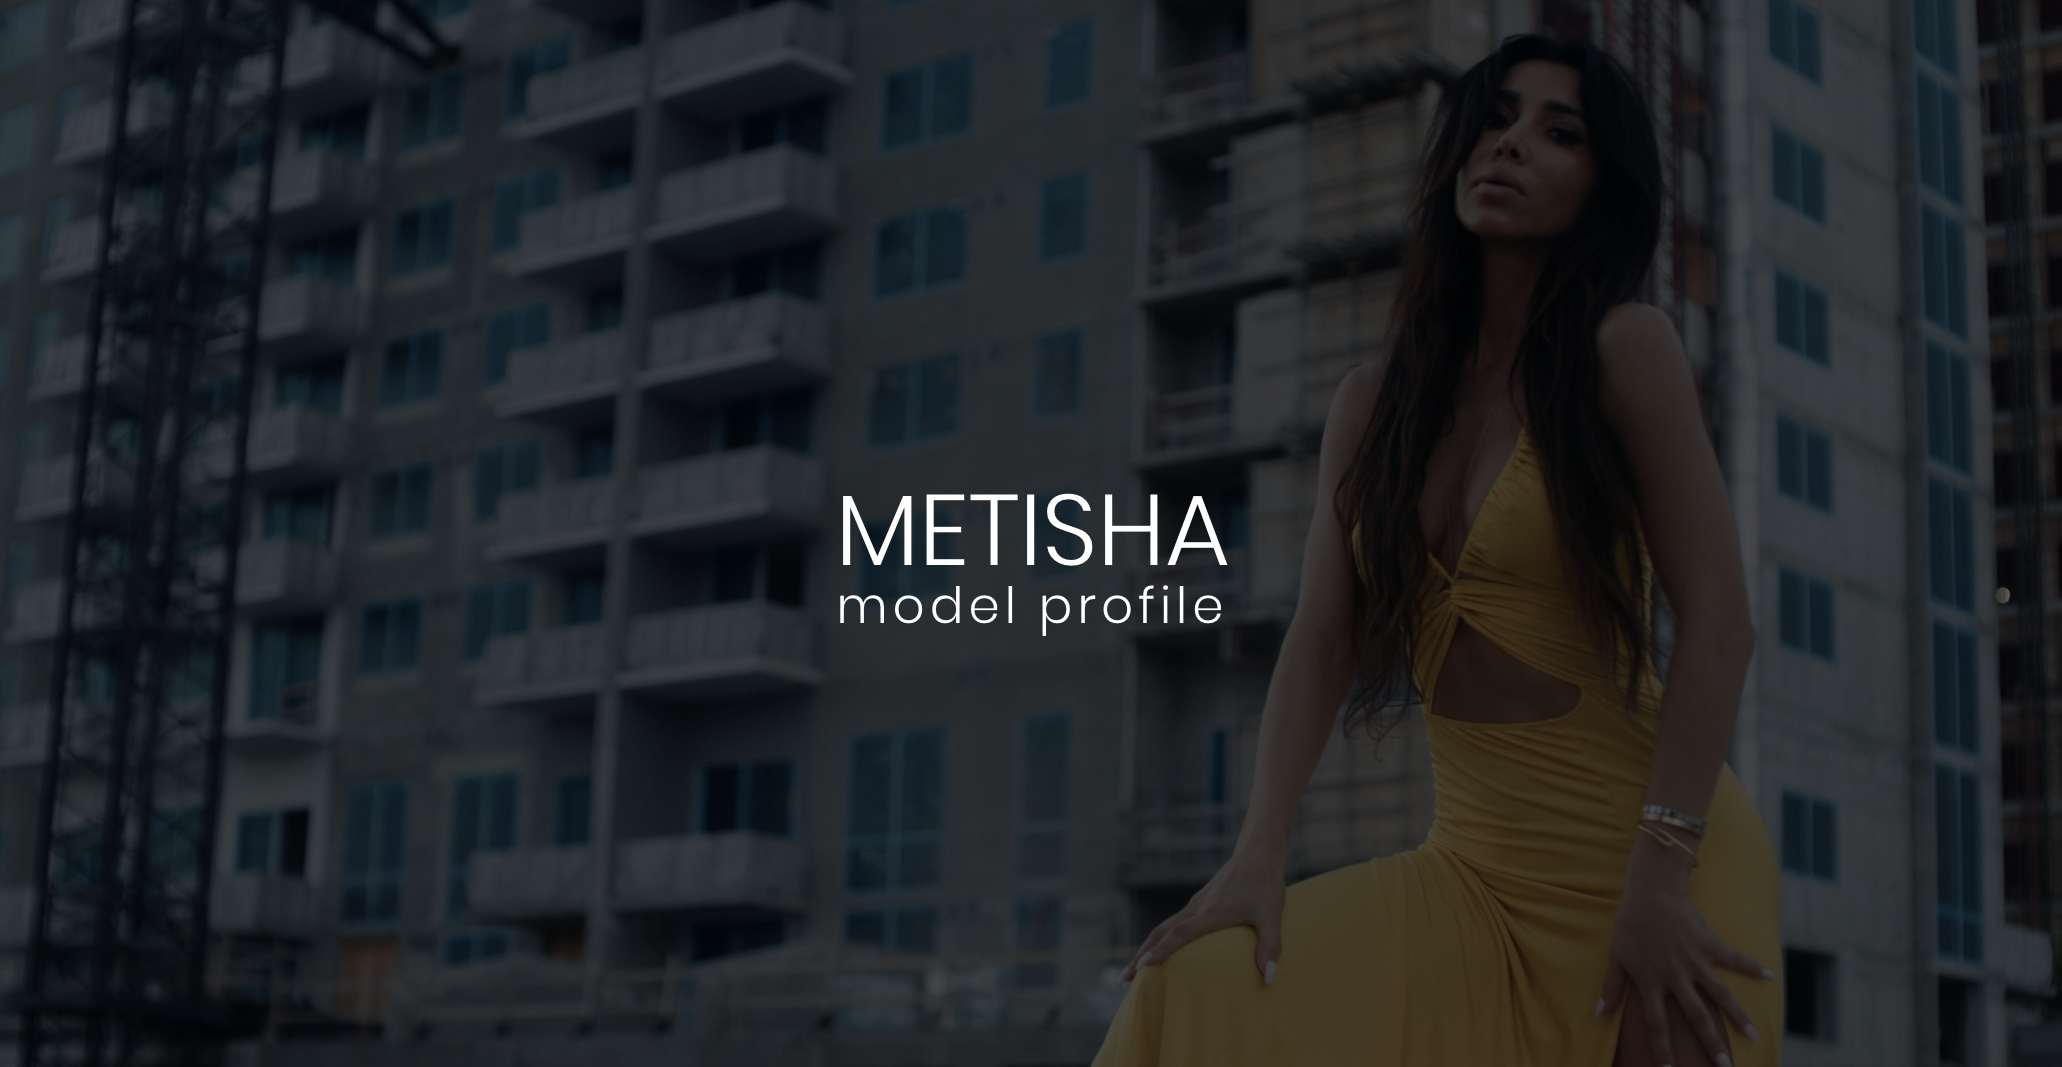 White Metisha Model Profile logo, Fort Lauderdale Talent Metisha posing in a yellow dress